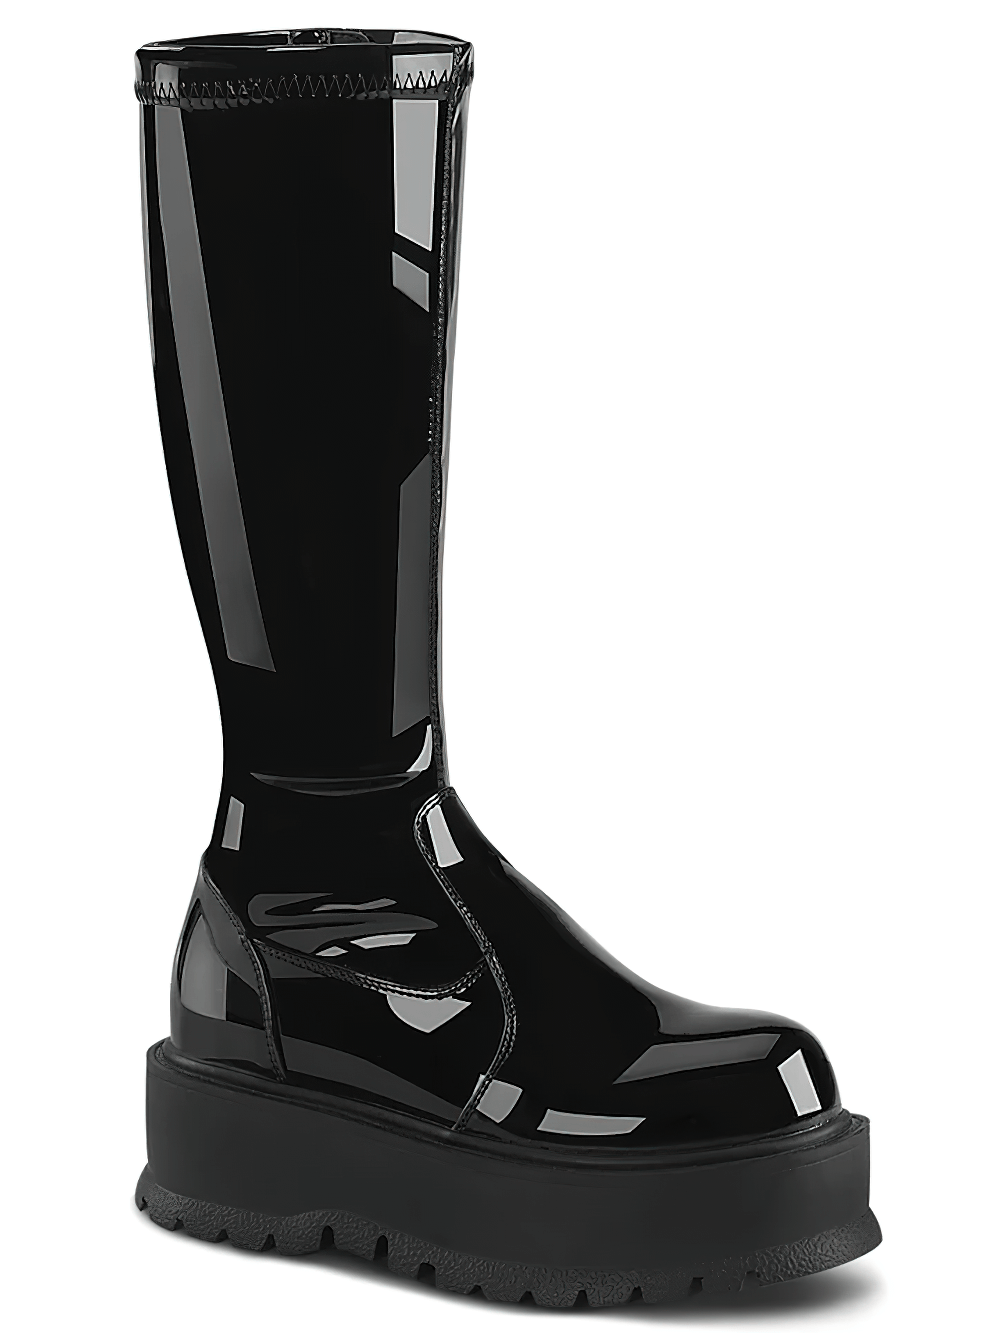 DEMONIA Sleek Black Patent Knee-High Platform Boots